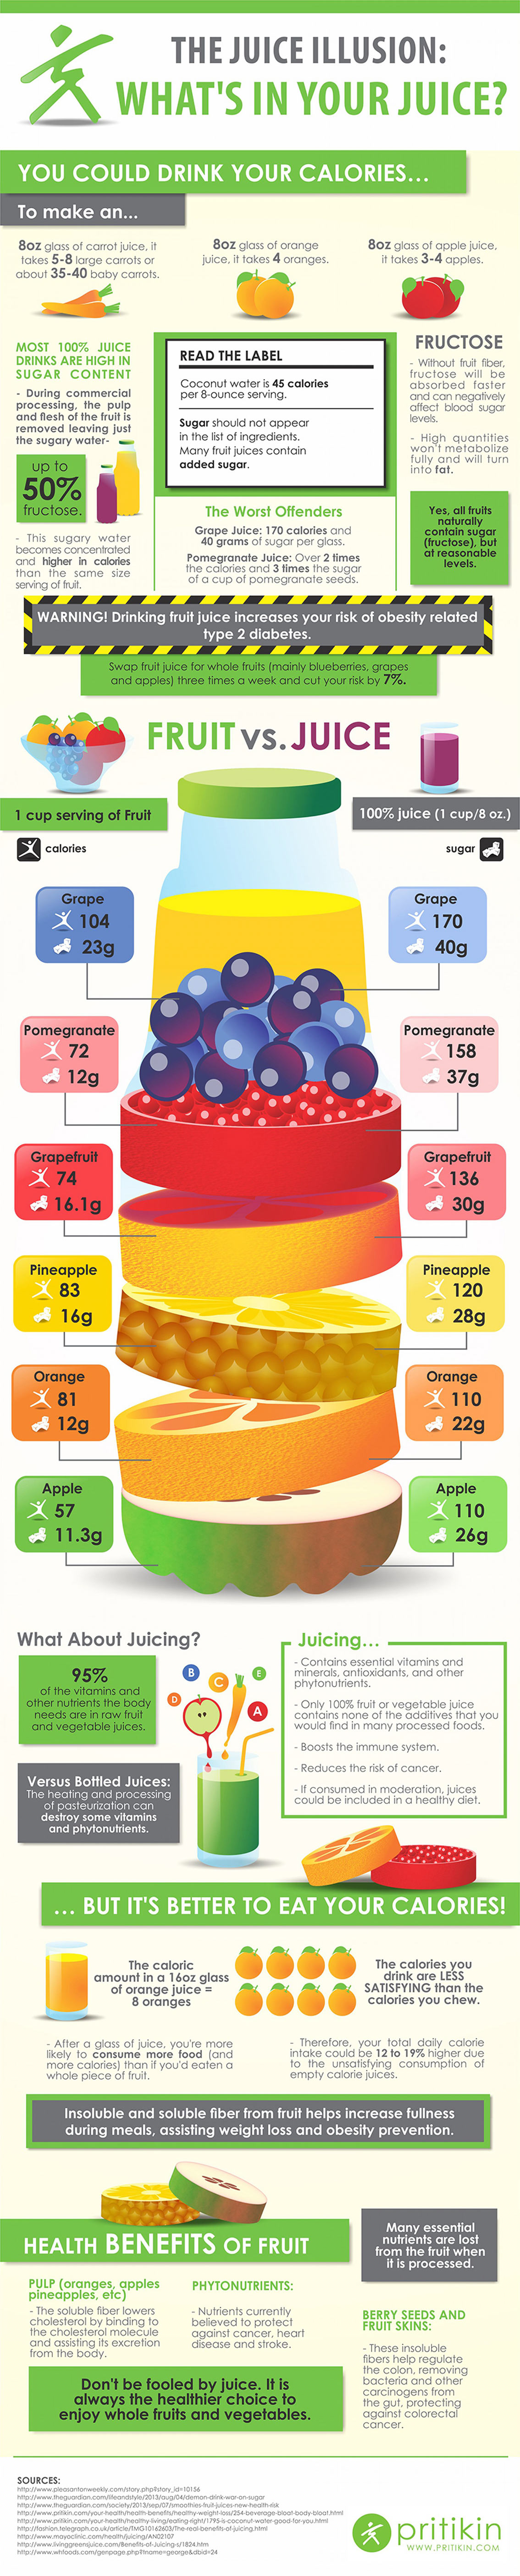 Whole Fruits vs Fruit Juice - Health Infographic